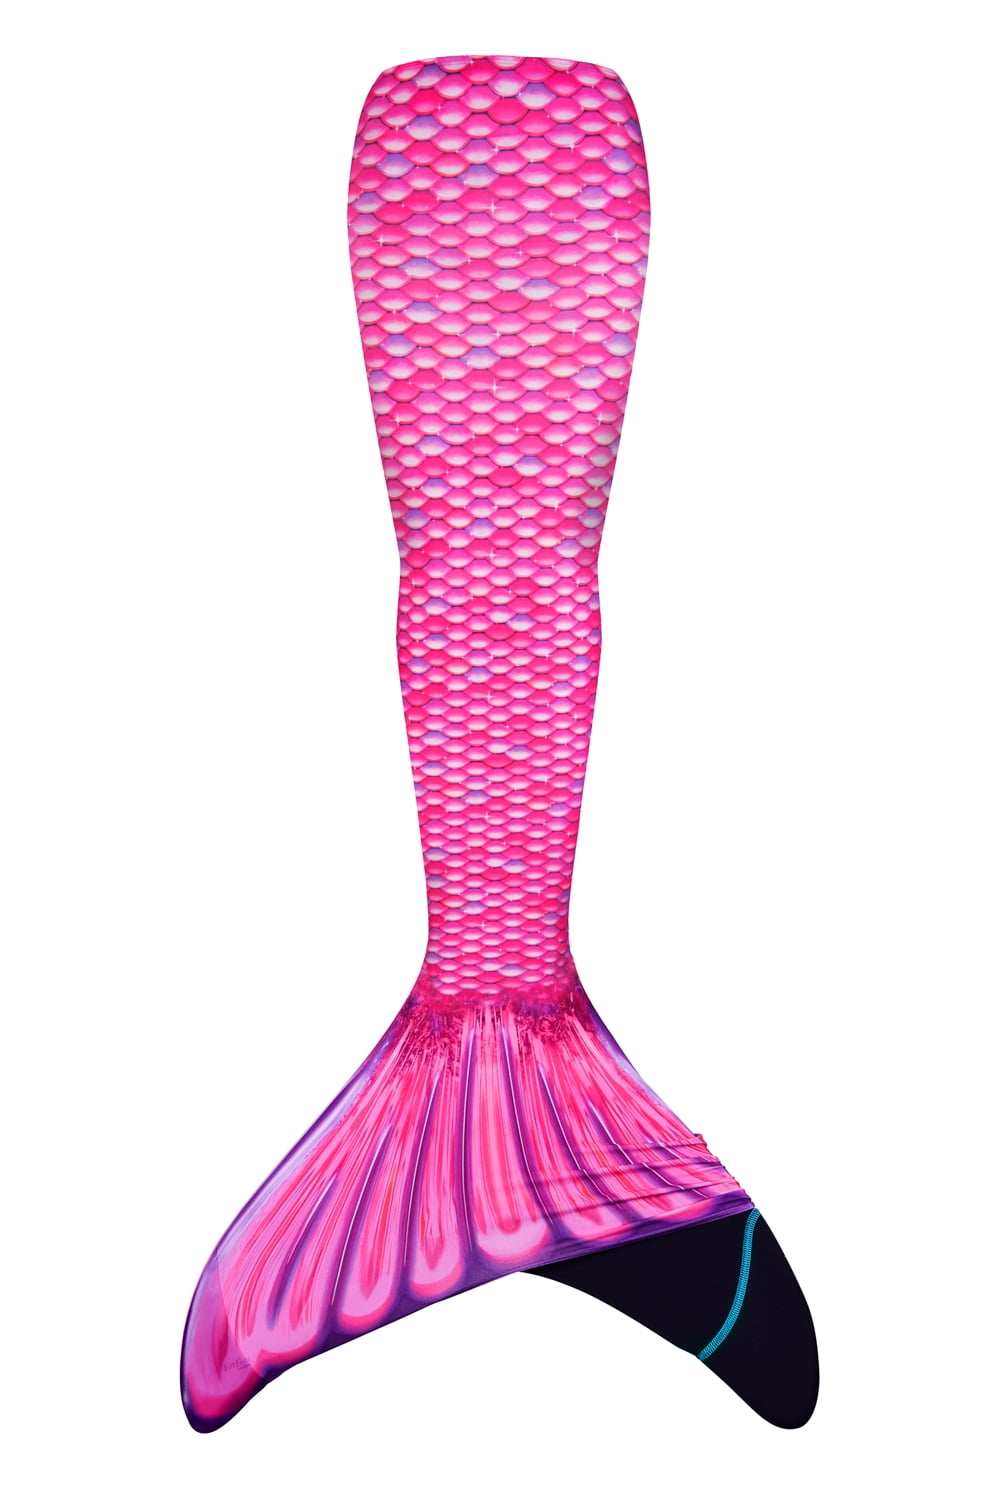 Emular Burlas garrapata Fin Fun Mermaid Tail with Monofin for Swimming in Malibu Pink, Adult  X-Small - Walmart.com